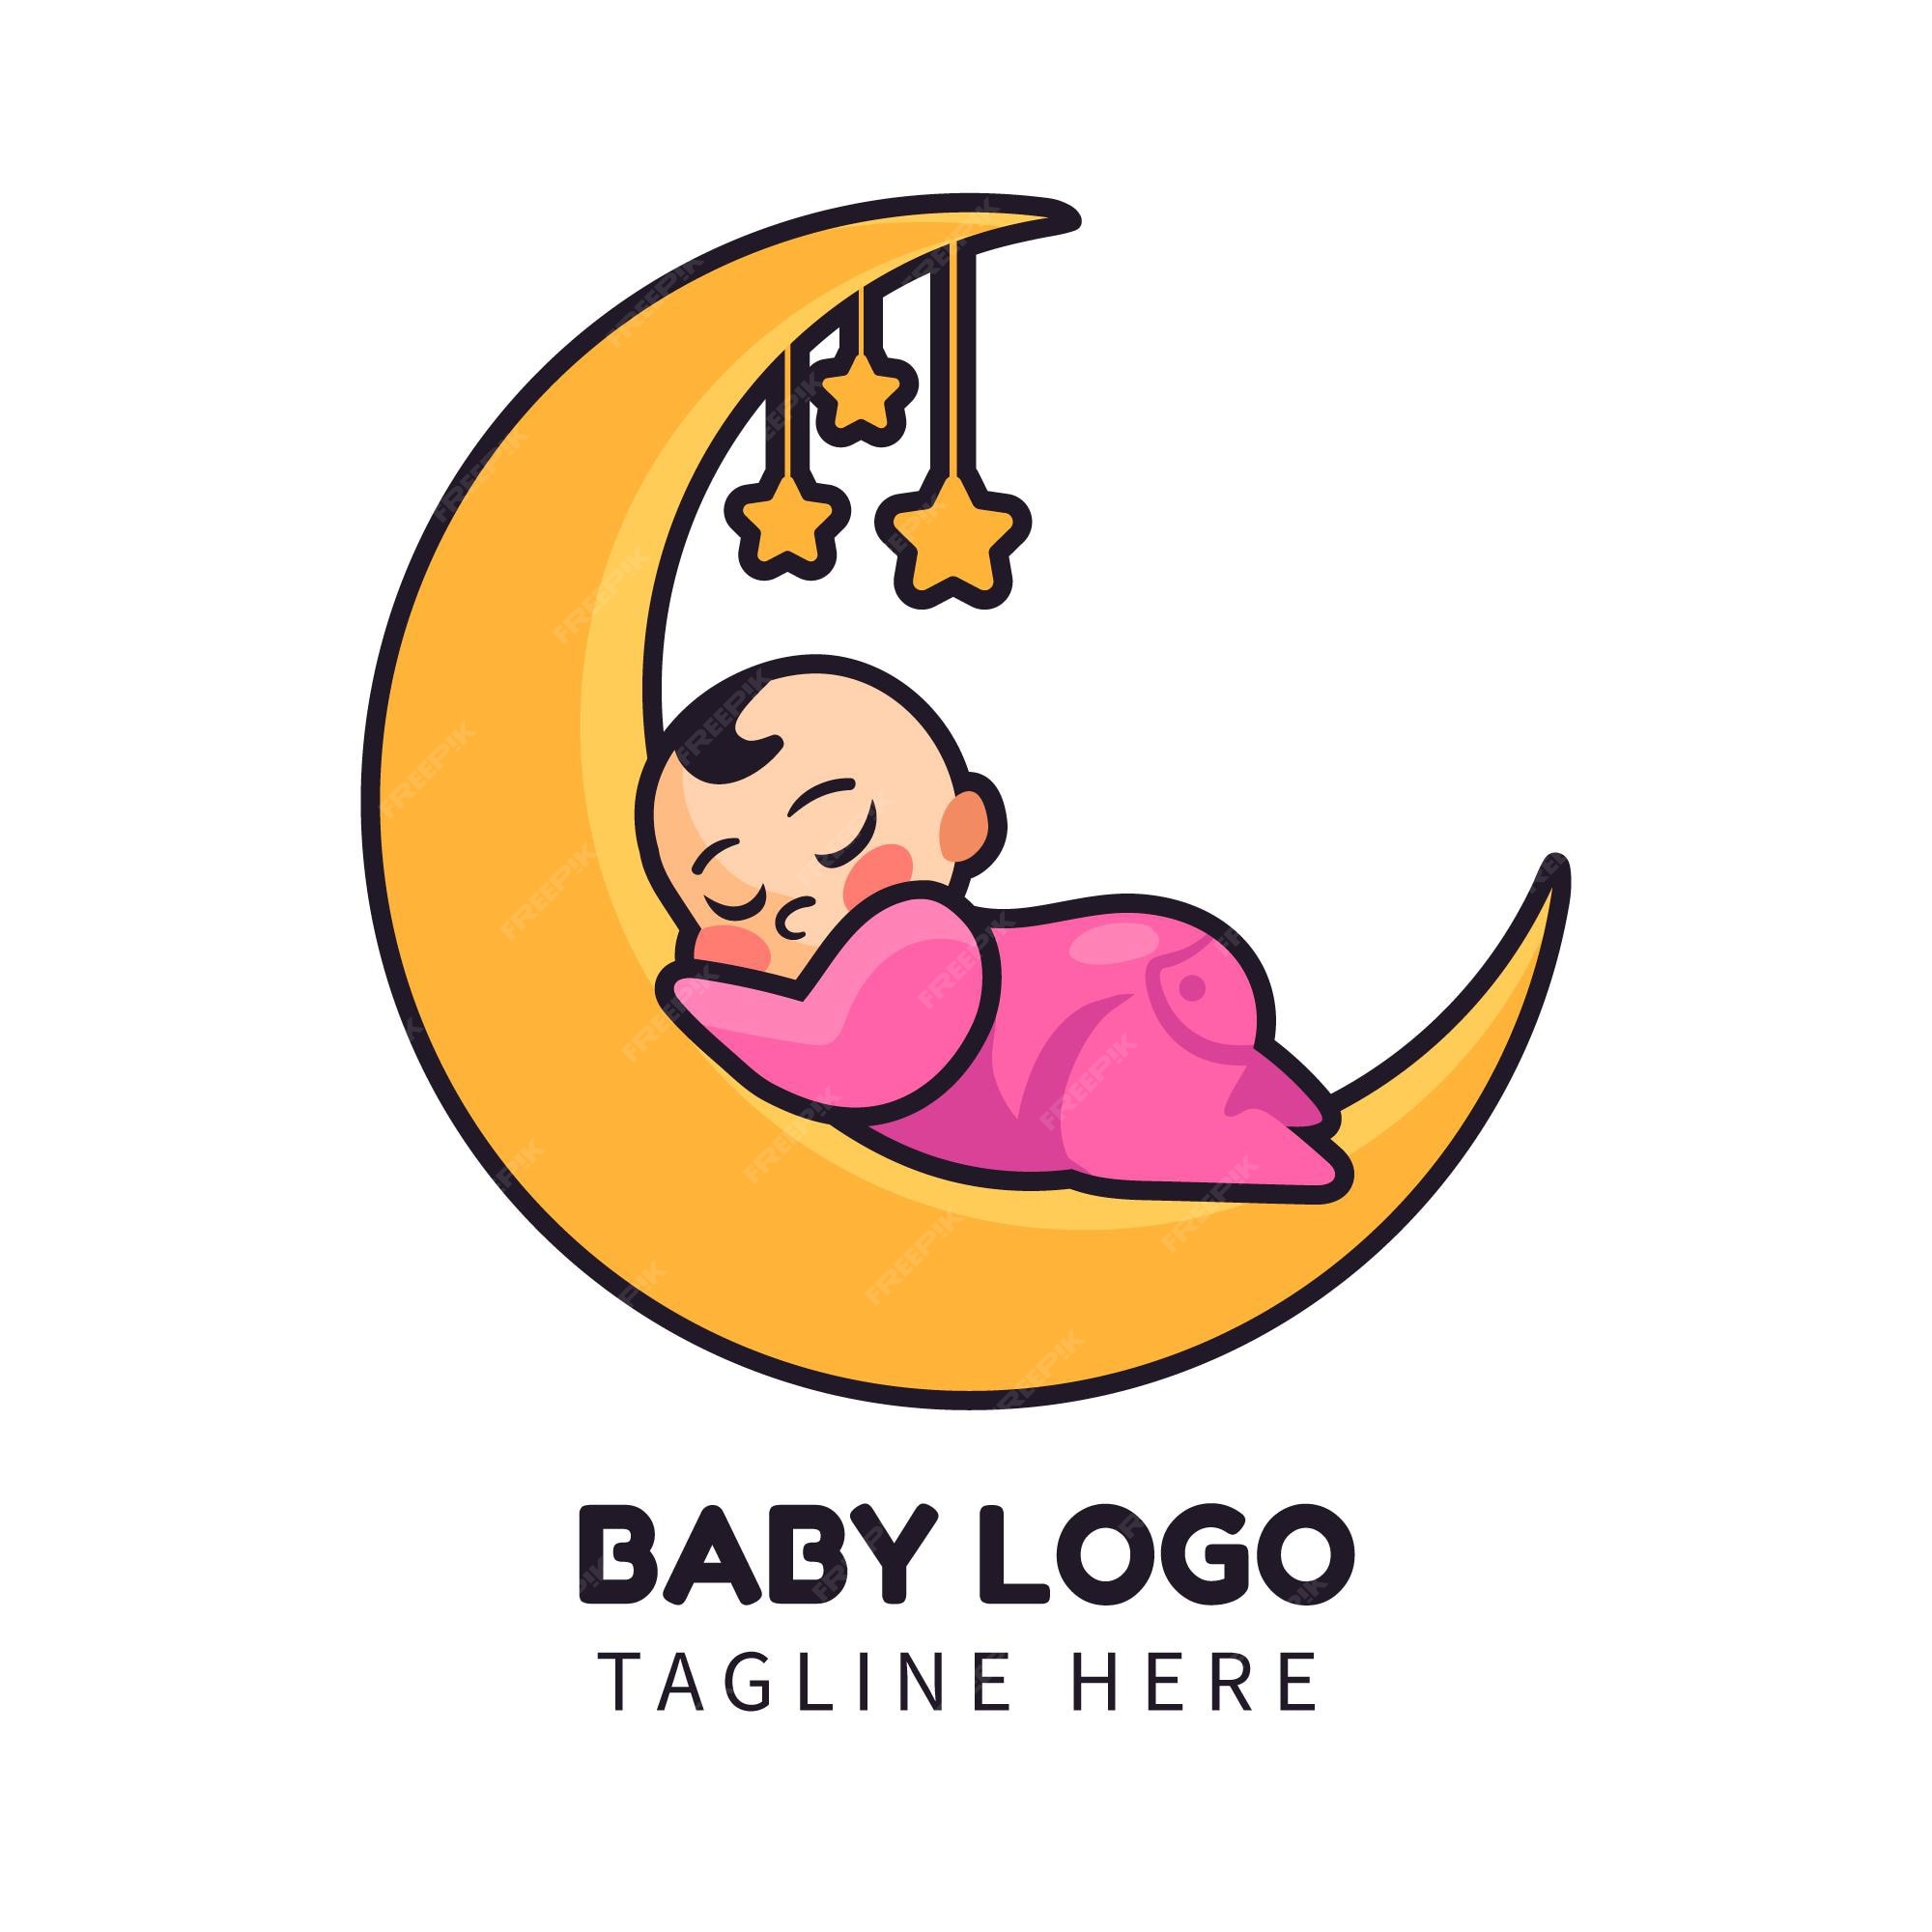 Premium Vector | Illustrated detailed baby logo